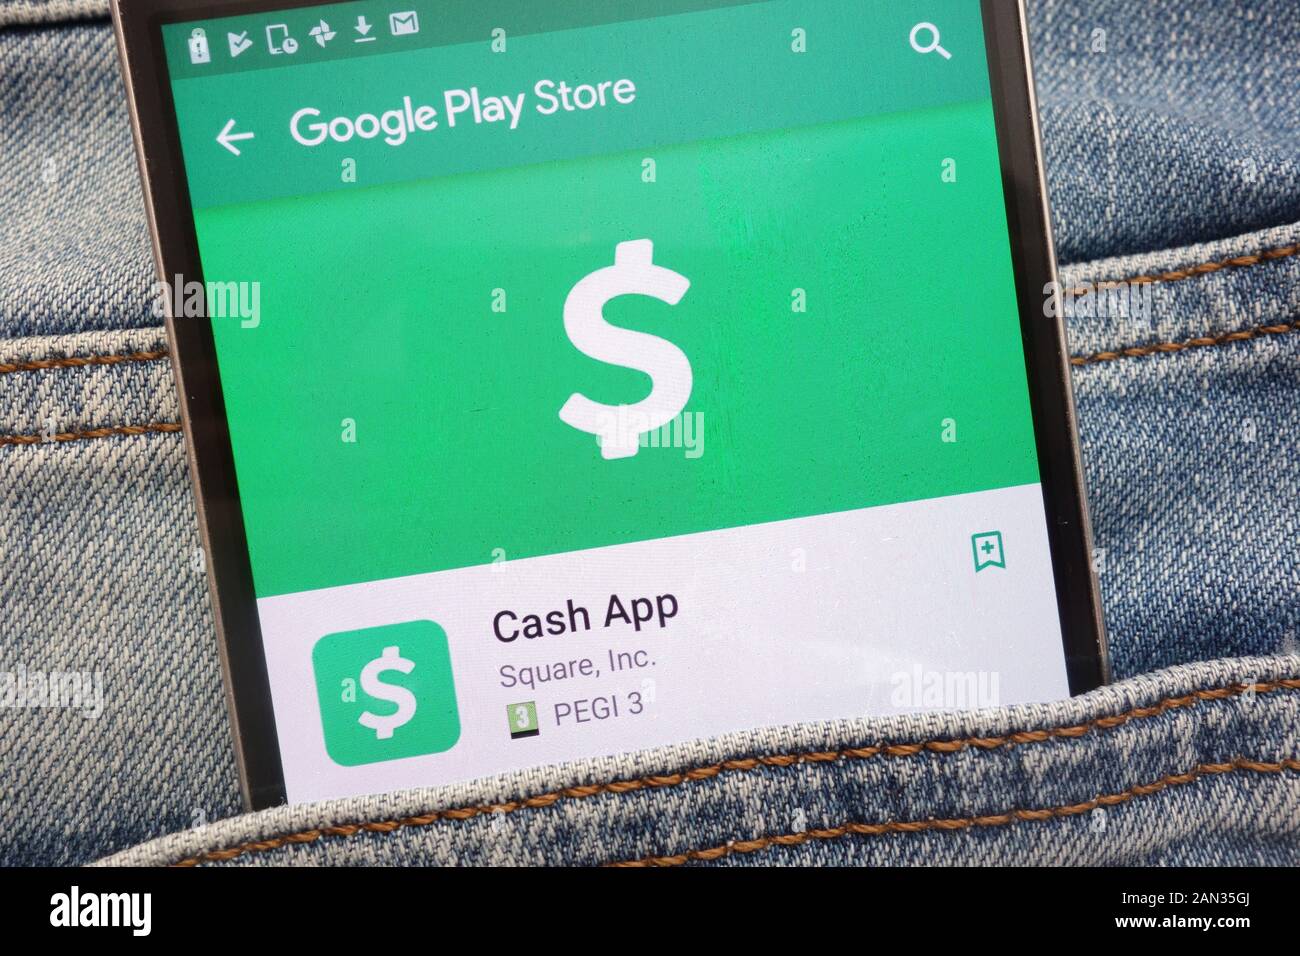 Cash App on Google Play Store website displayed on smartphone hidden in jeans pocket Stock Photo